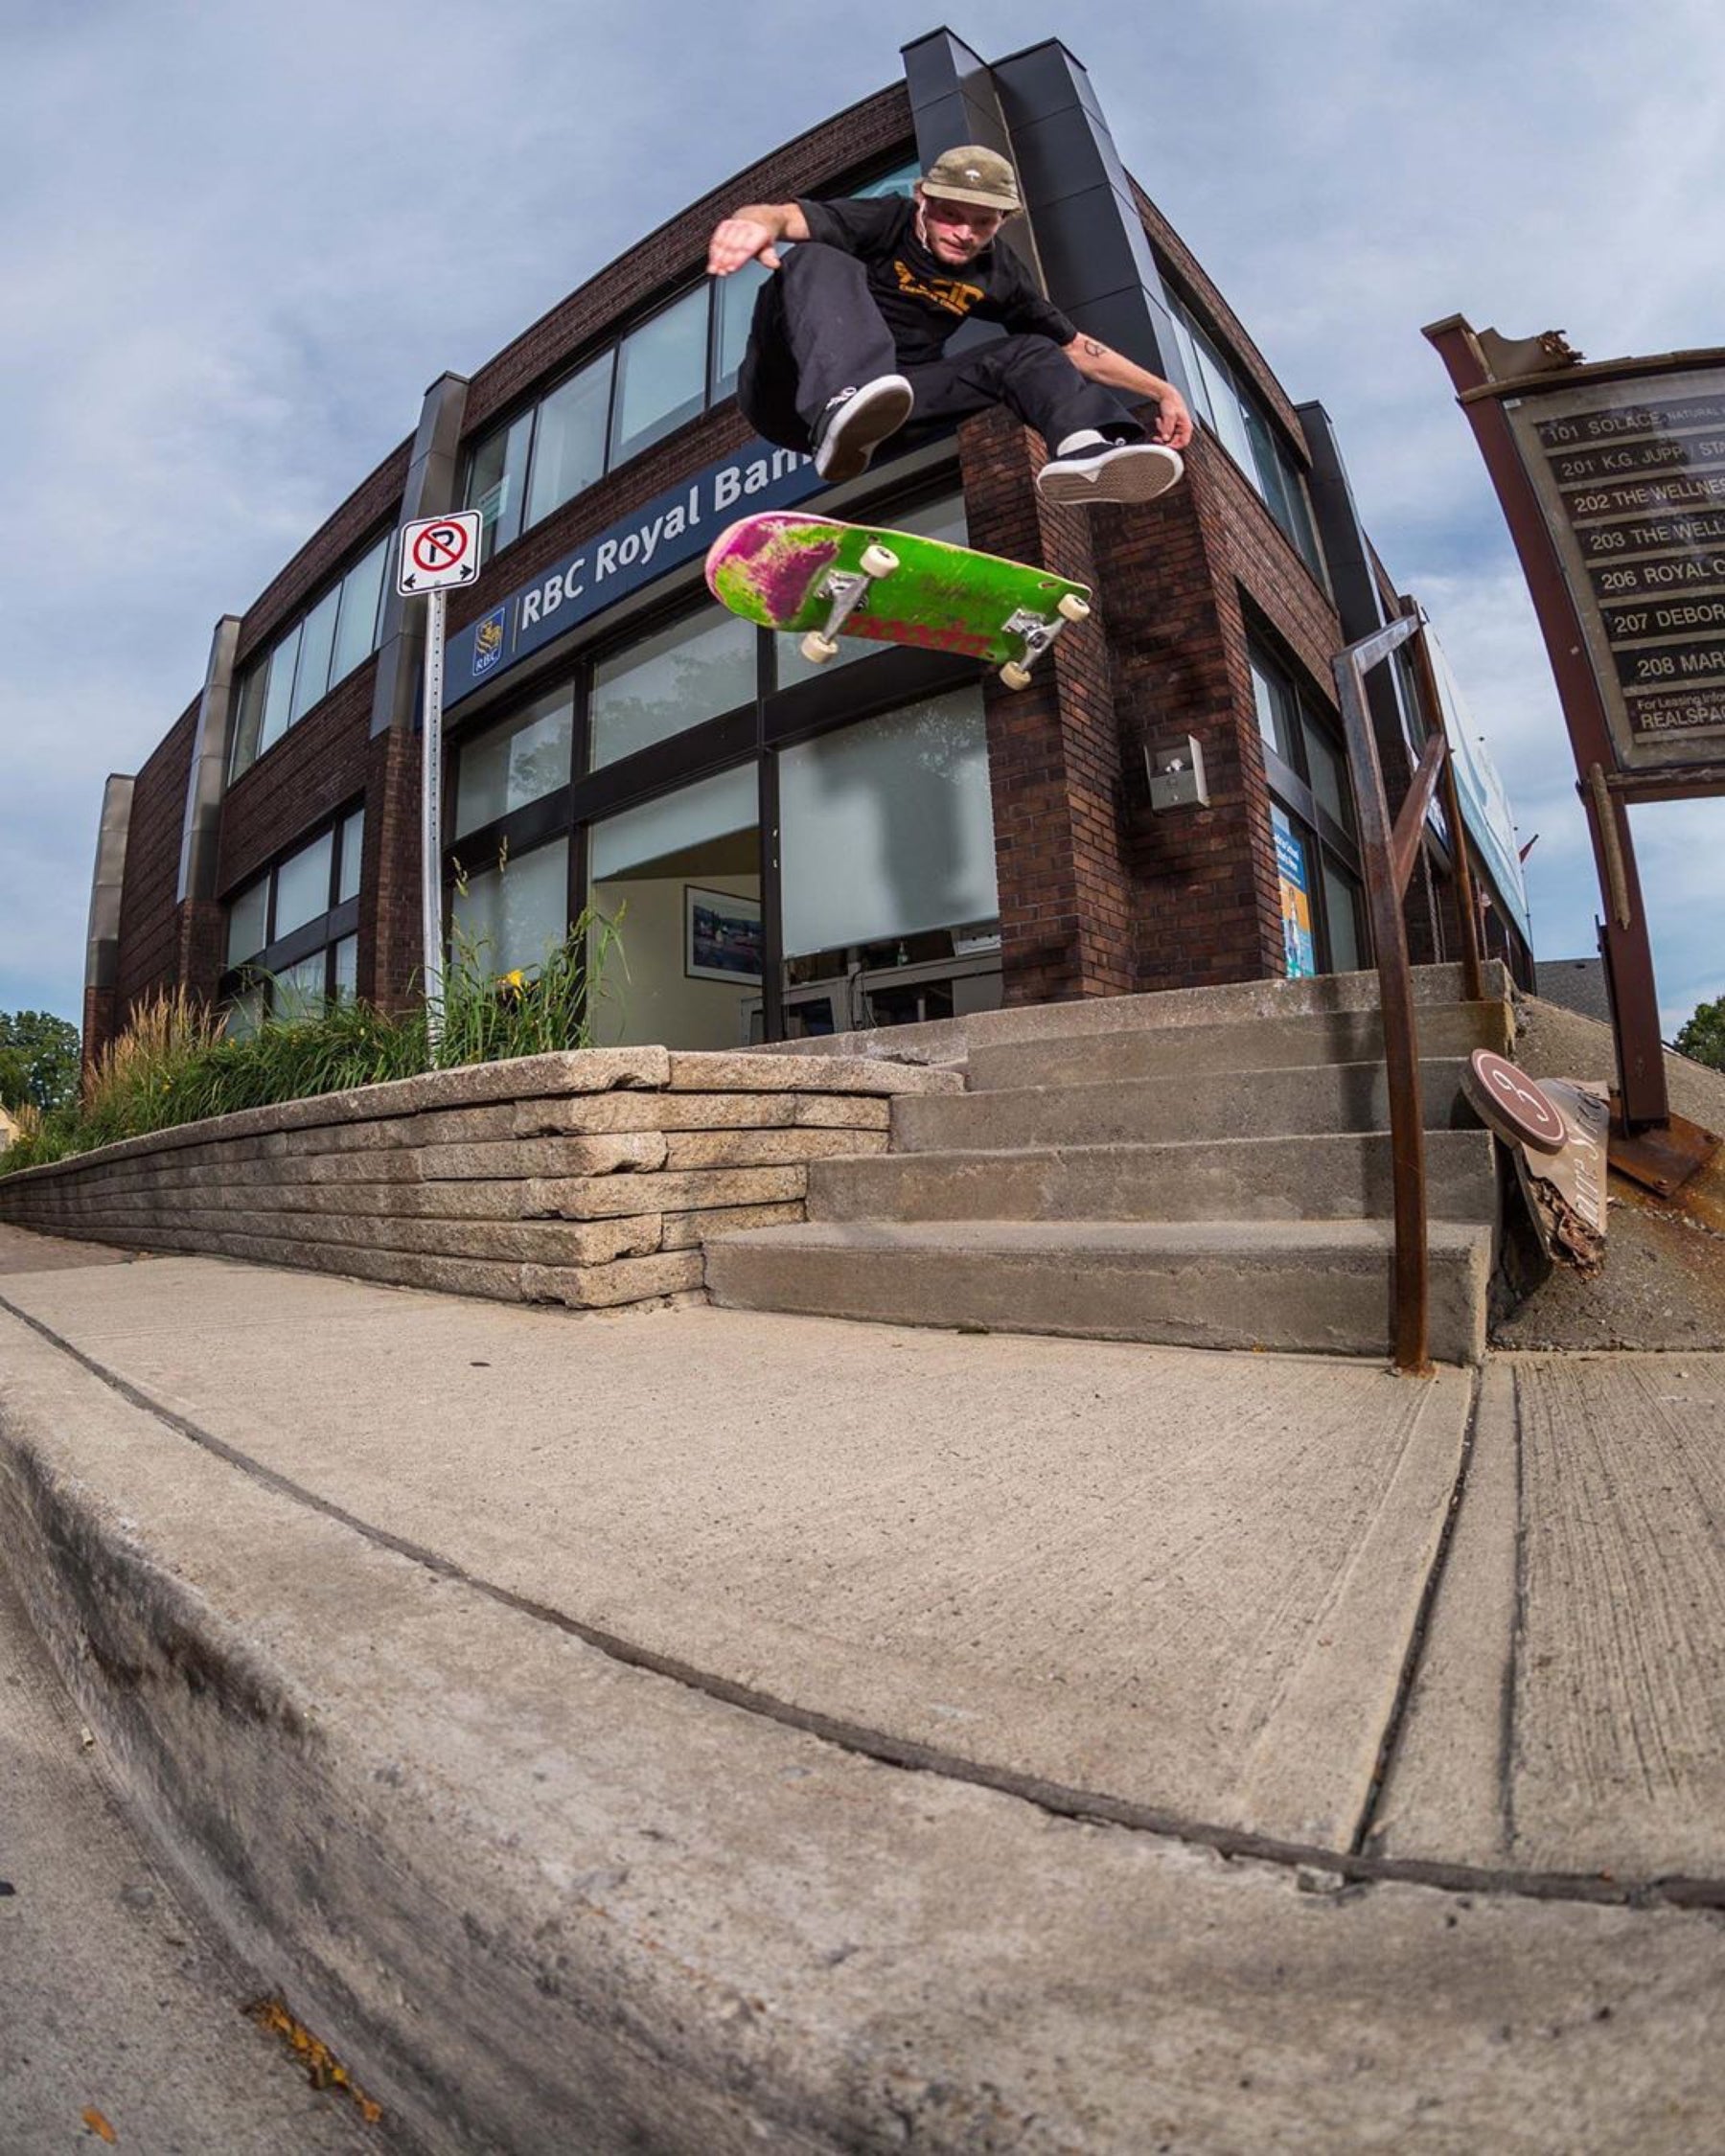 Justin Fabus in latest Neighbourhood Skate Mag